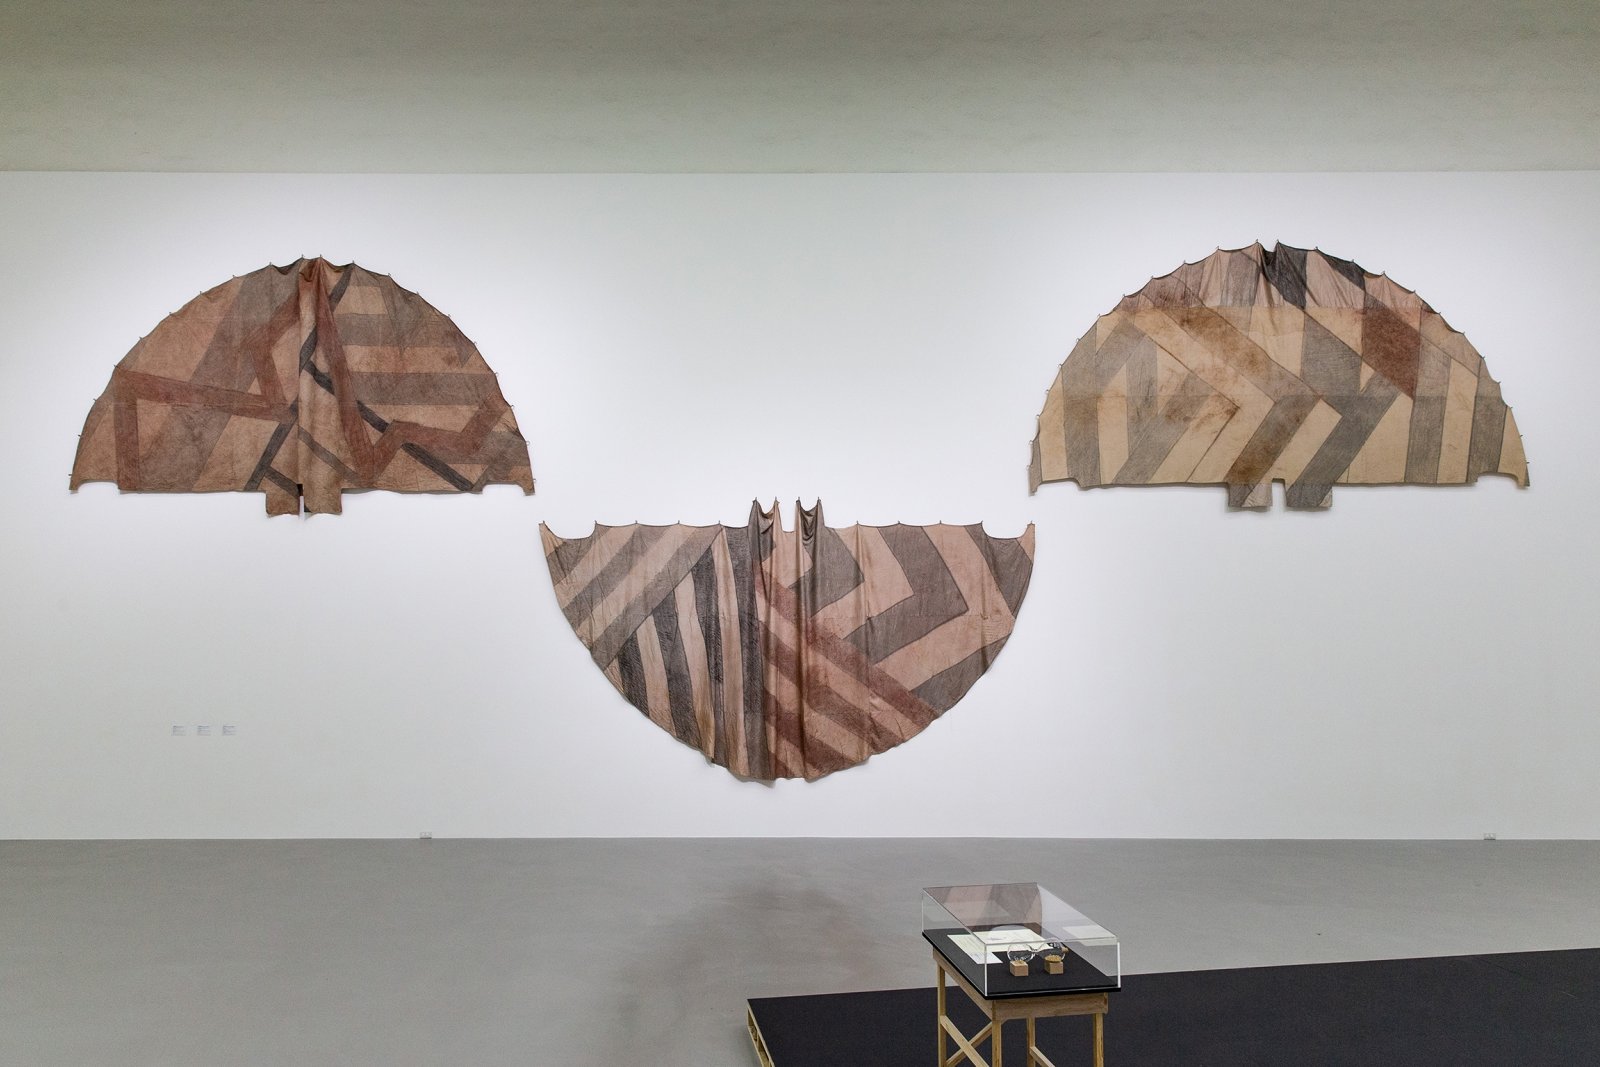 Duane Linklater, installation view, Post-Nature—A Museum as an Ecosystem, Taipei Biennial 2018, Taipei Fine Arts Museum, Taiwan, 2018